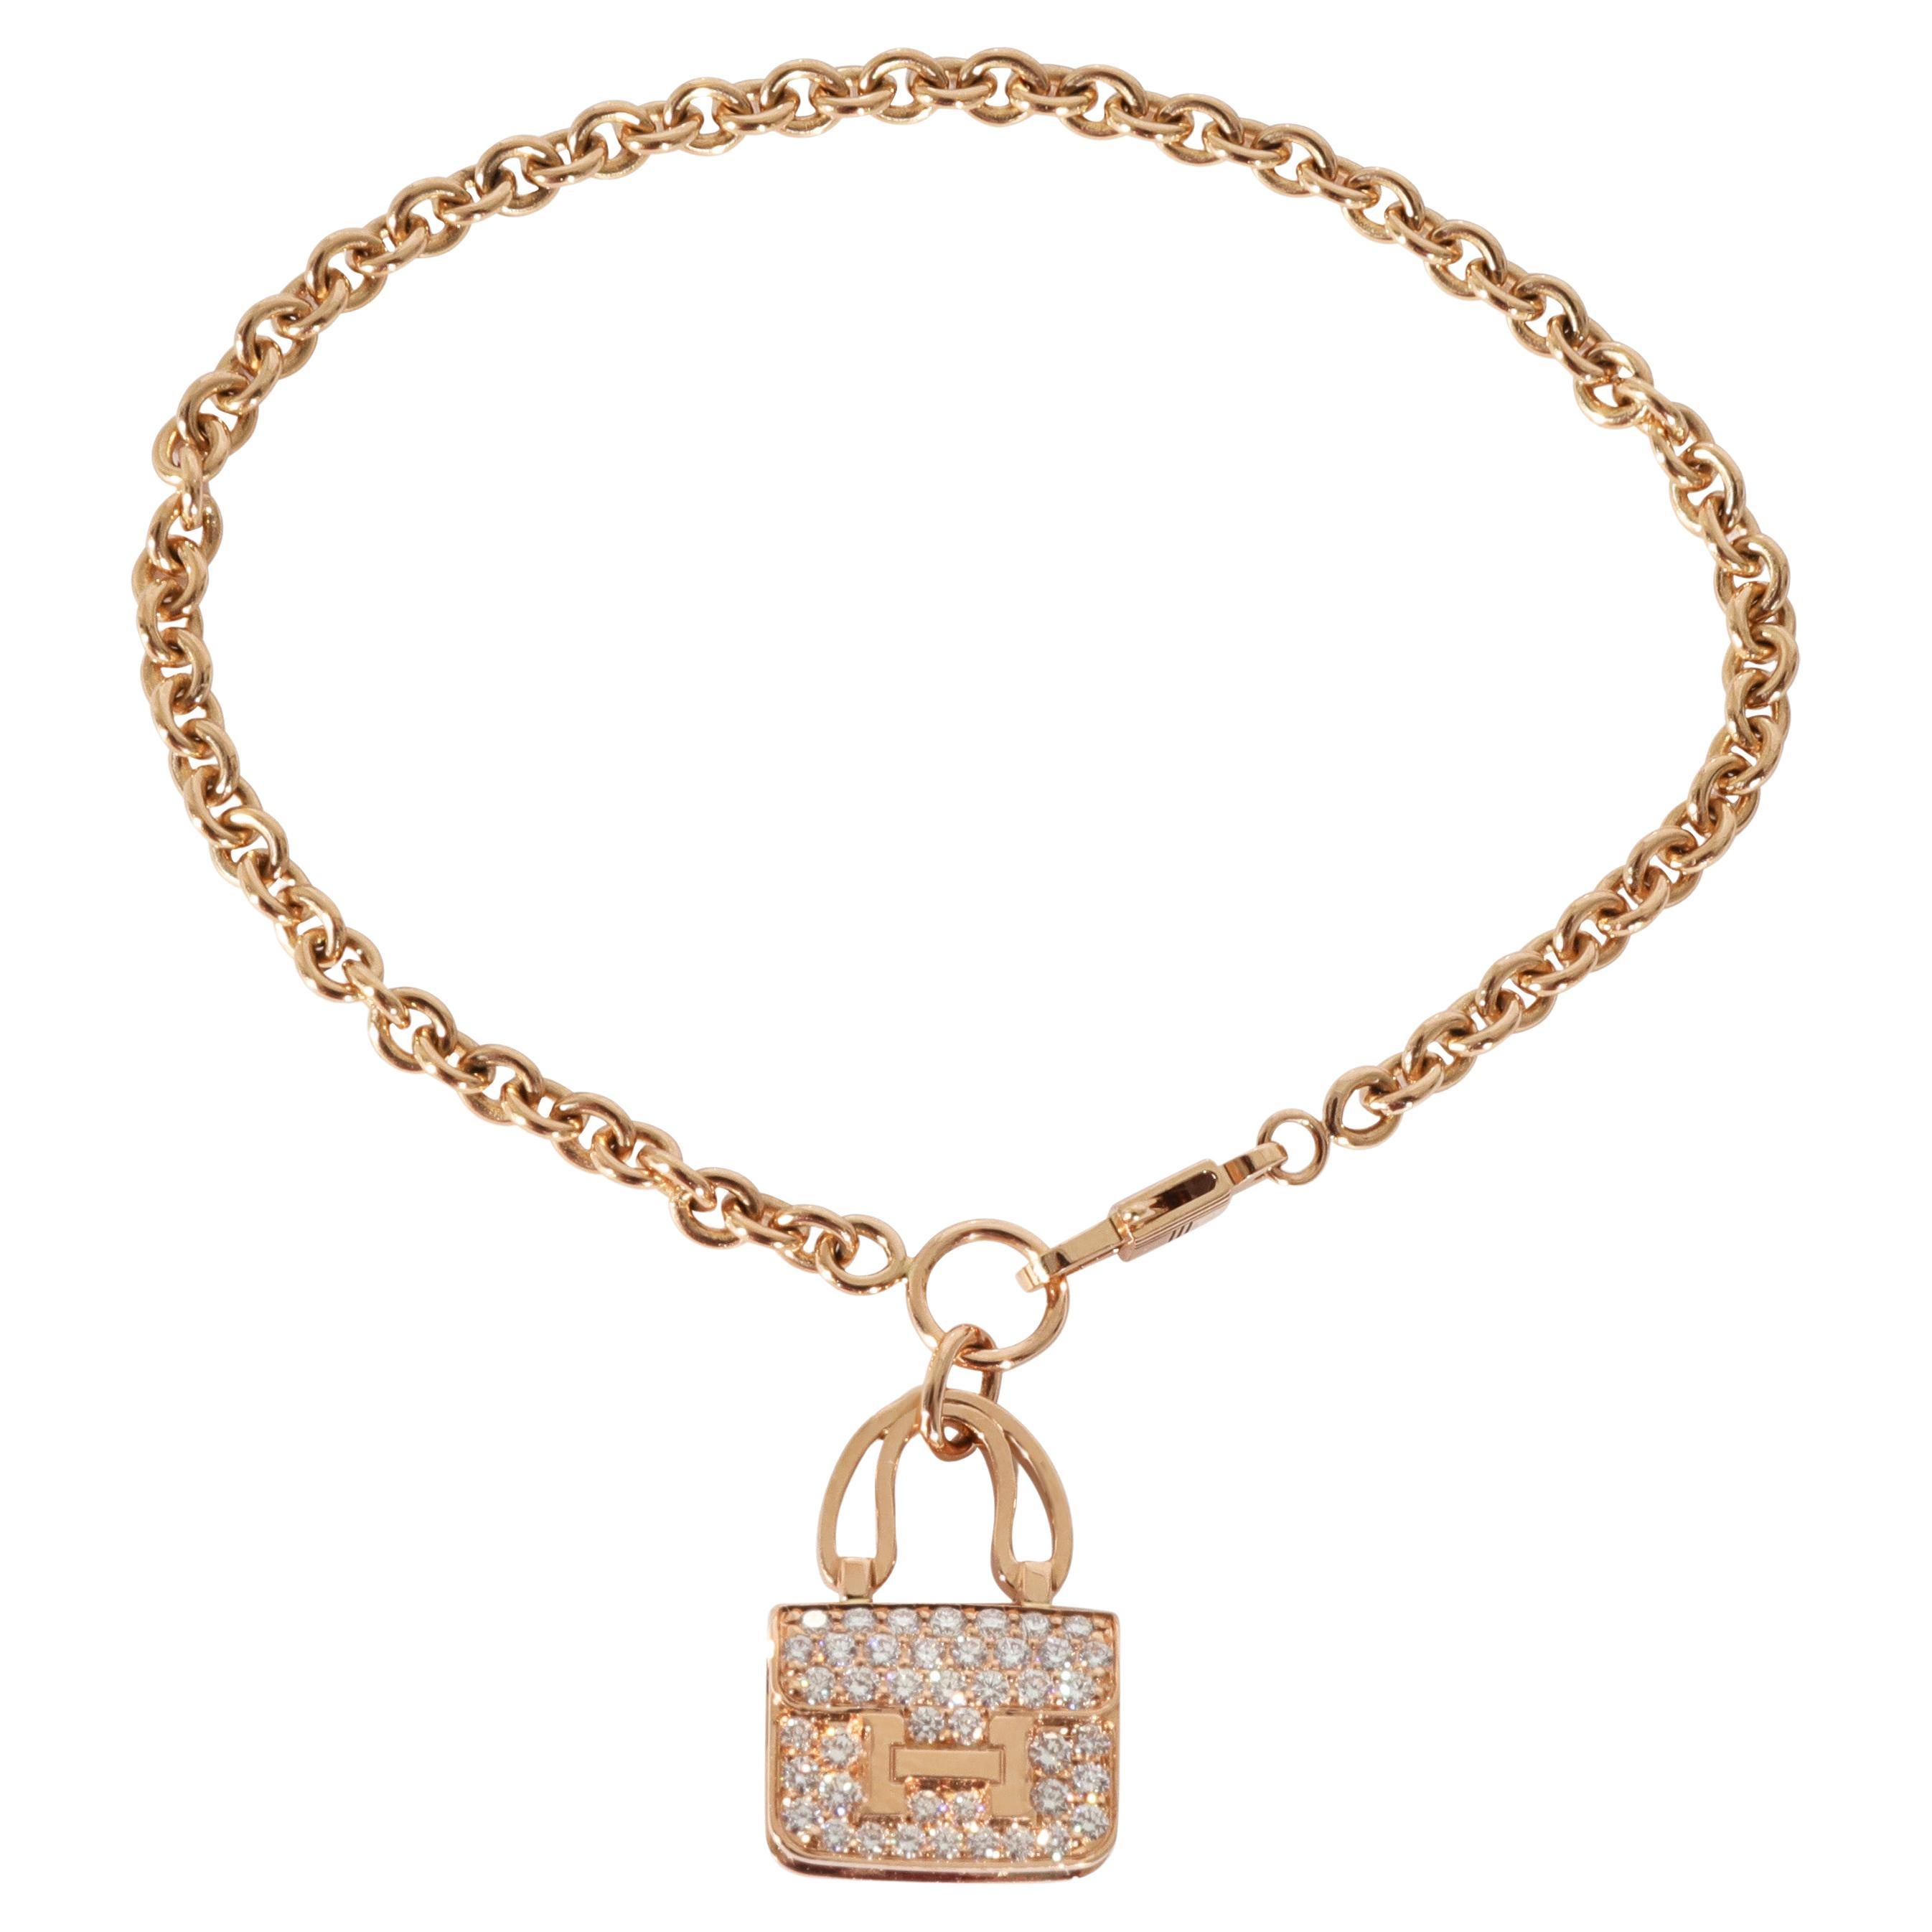 Hermes Amulettes Collection Diamond Bracelet in 18k Rose Gold 0.58ctw For Sale